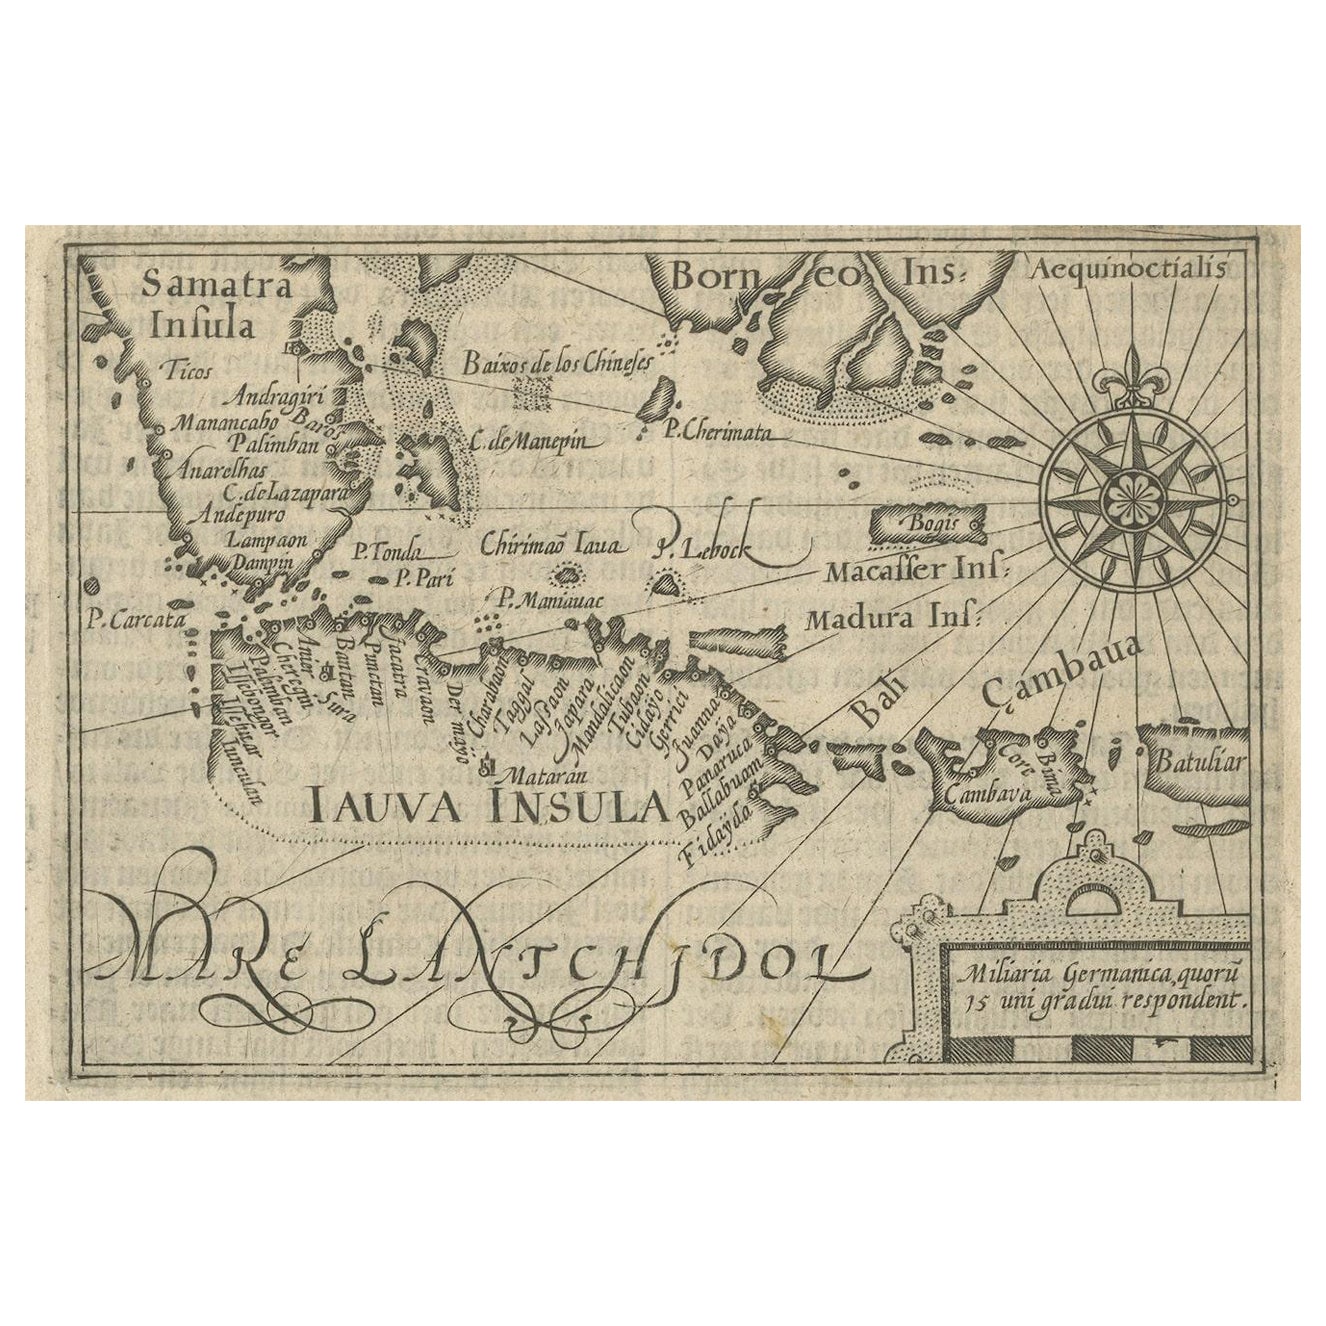 Rare Small Map of Sumatra, Java, Borneo, Macassar, Madura, Bali, 1614